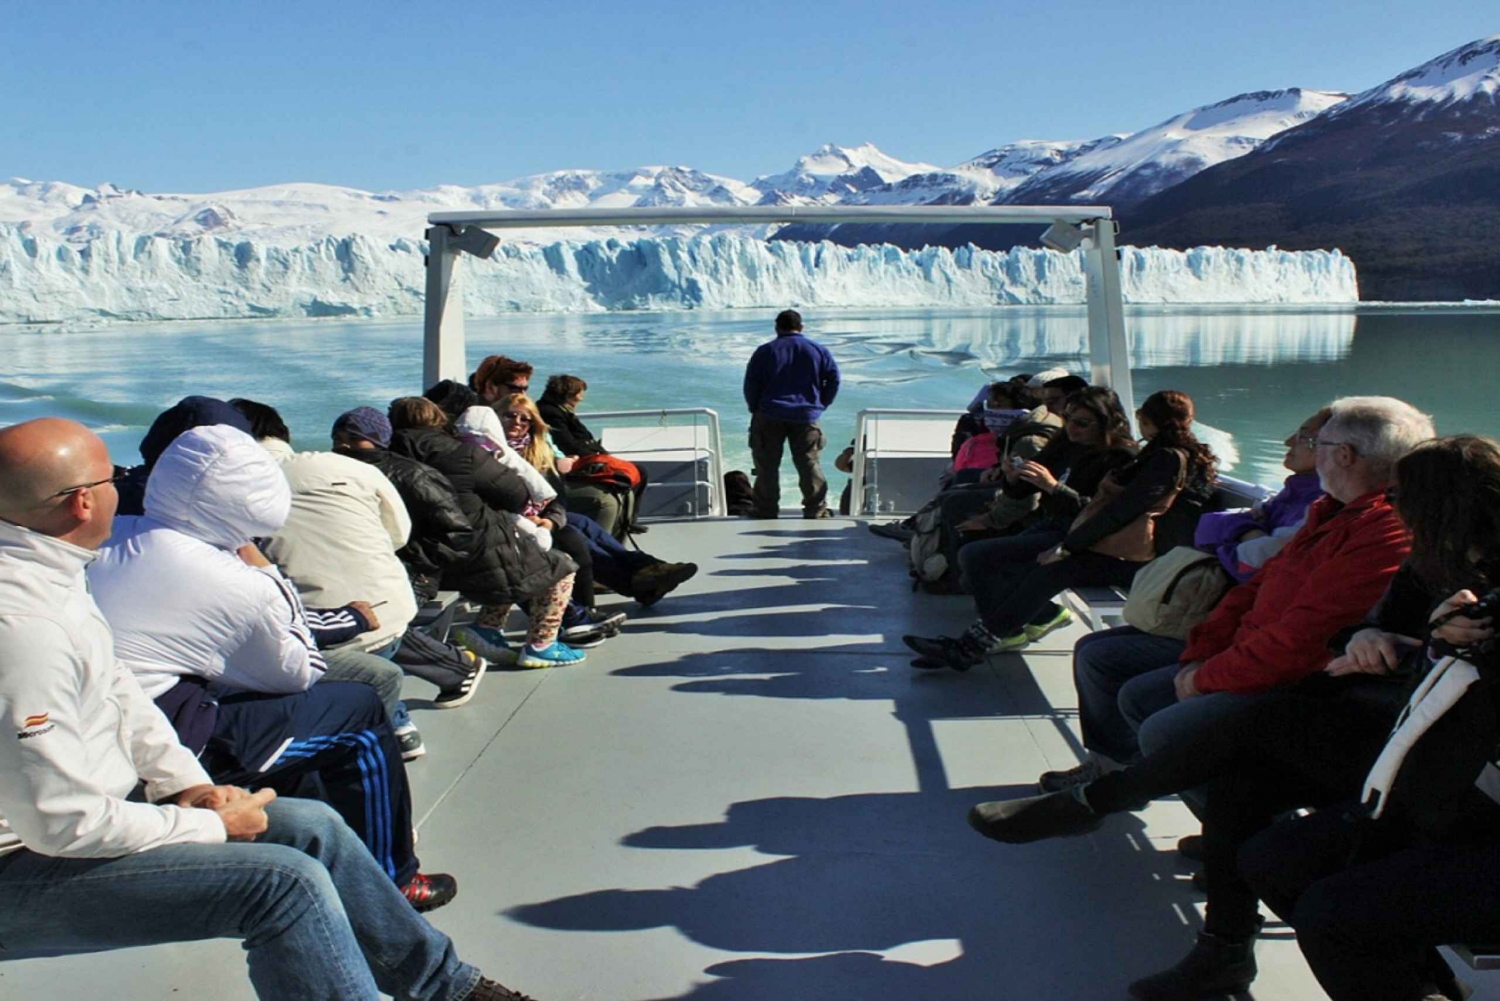 El Calafate: Perito Morenon jäätikkö, laivaristeily & Glaciarium